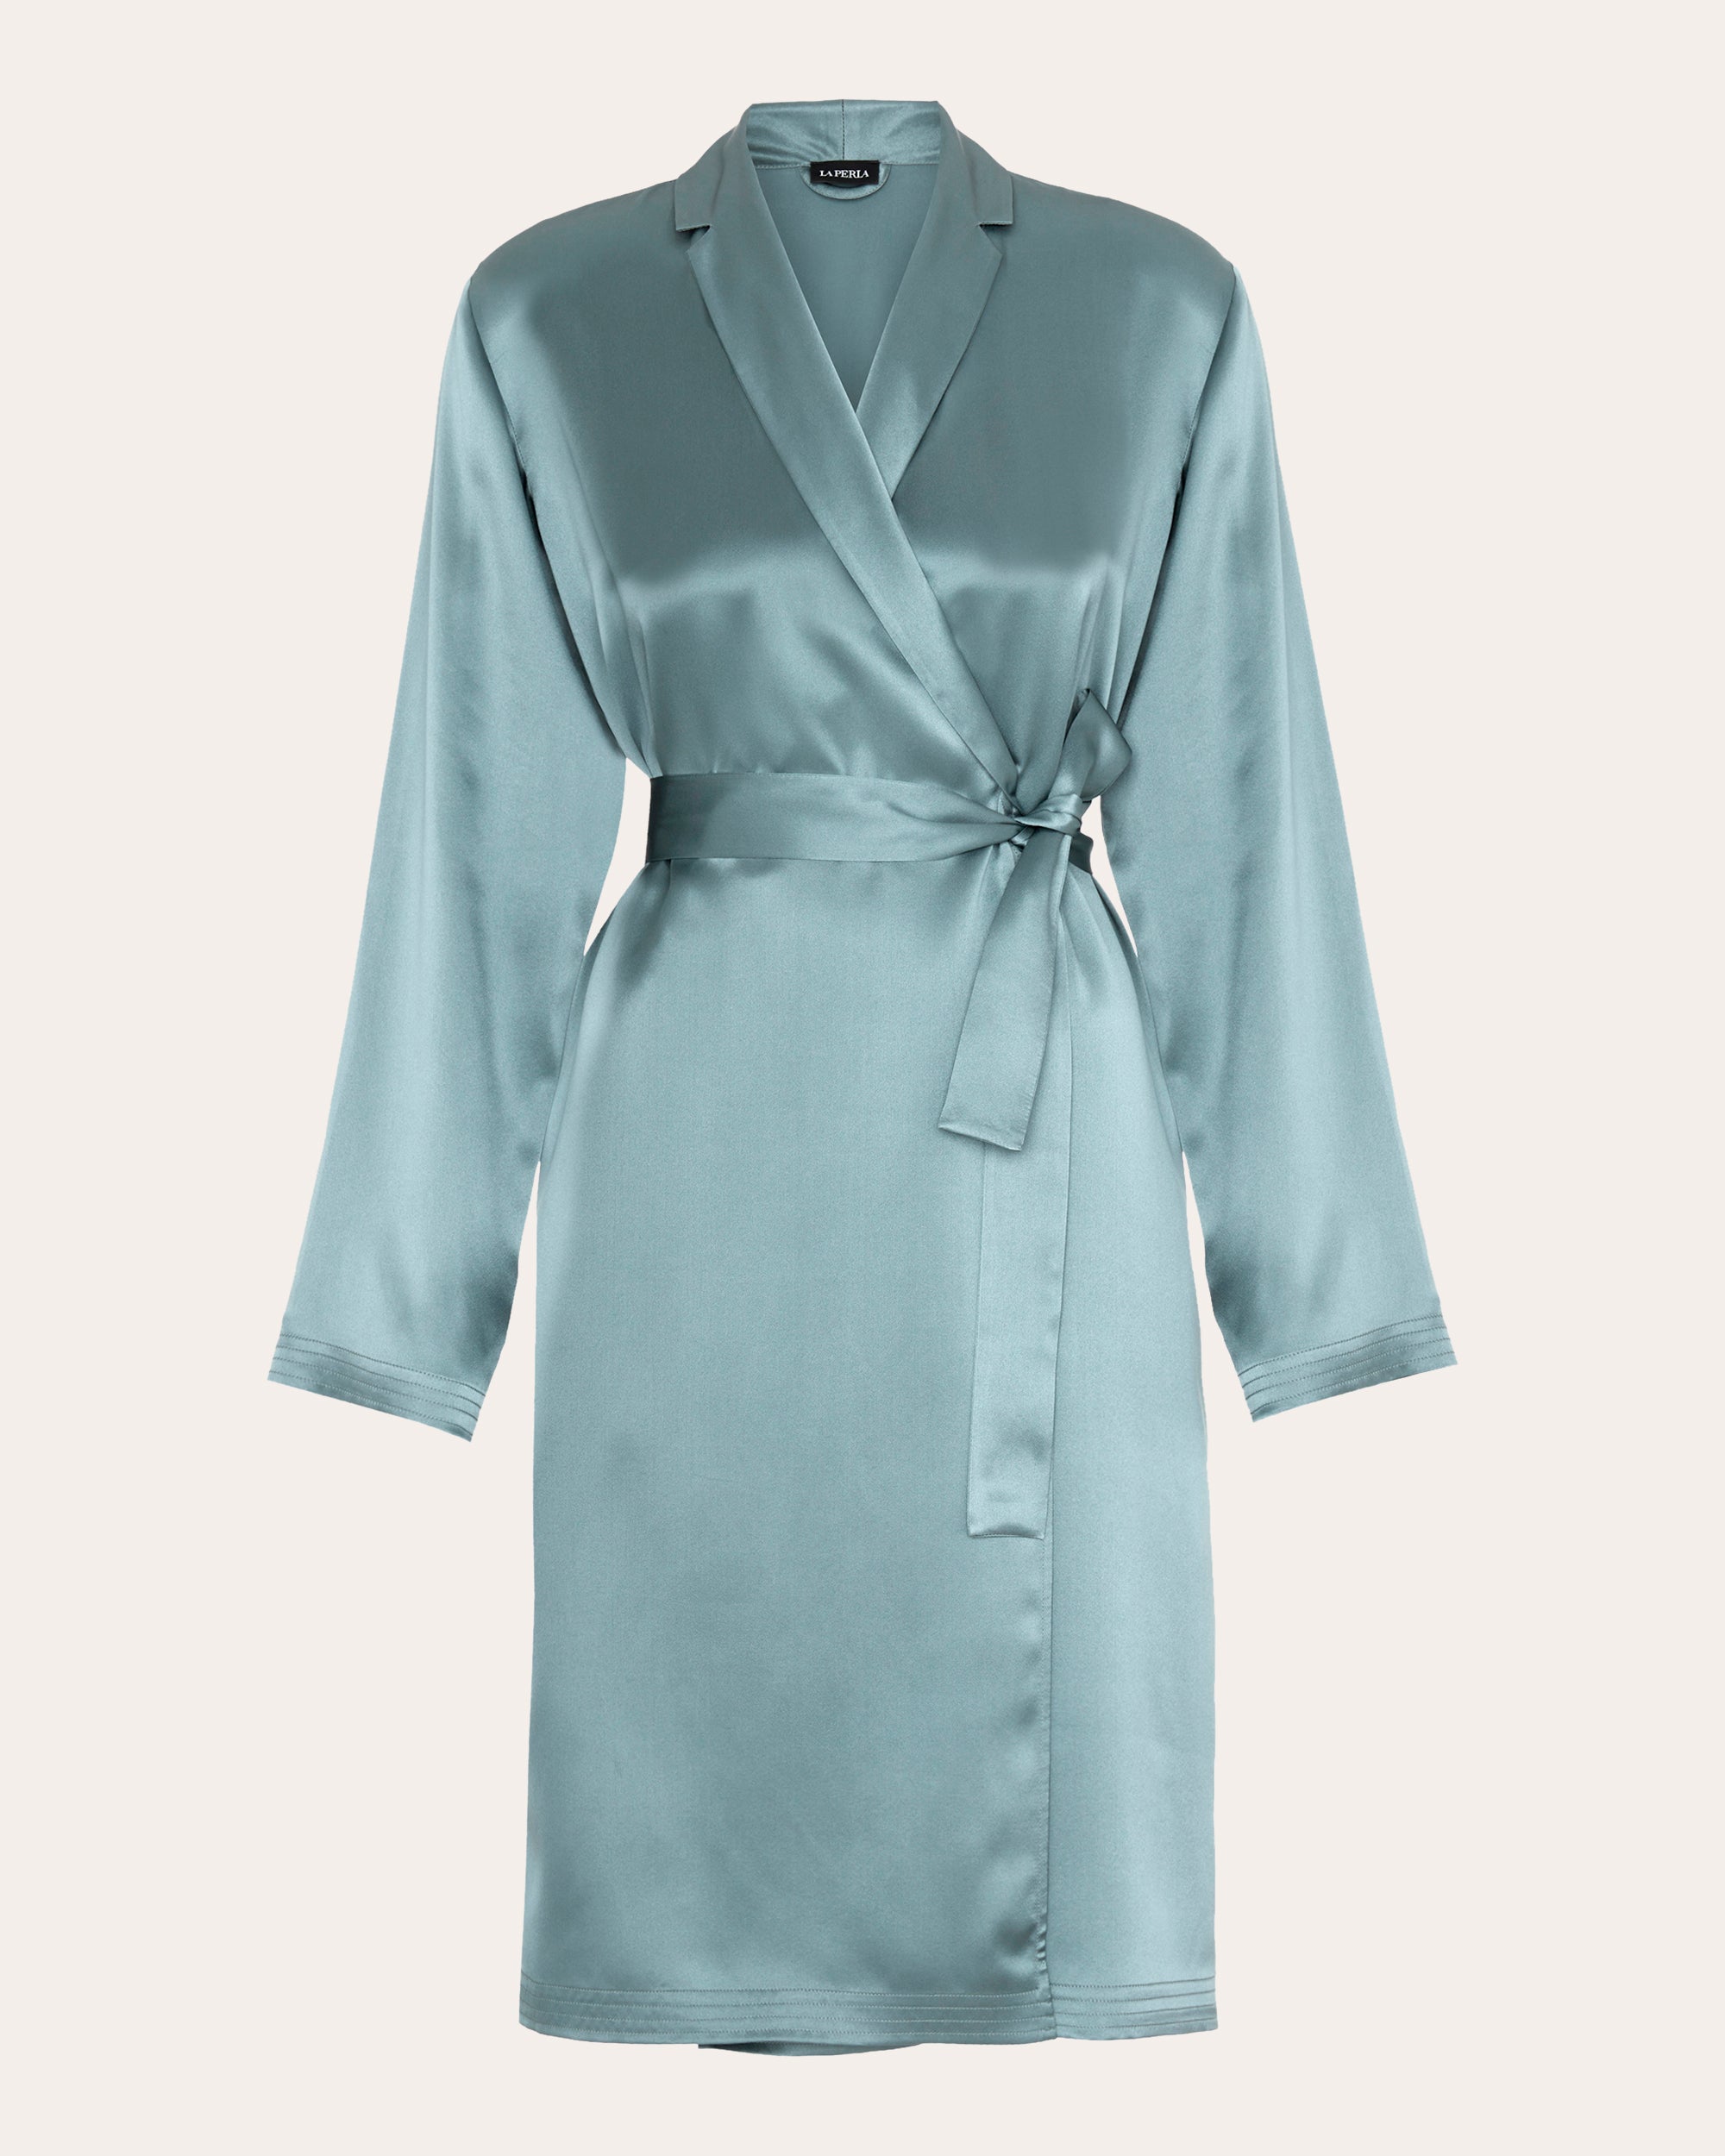 Robe kimono courte en soie pour femmes, robe de chambre en soie à fleu